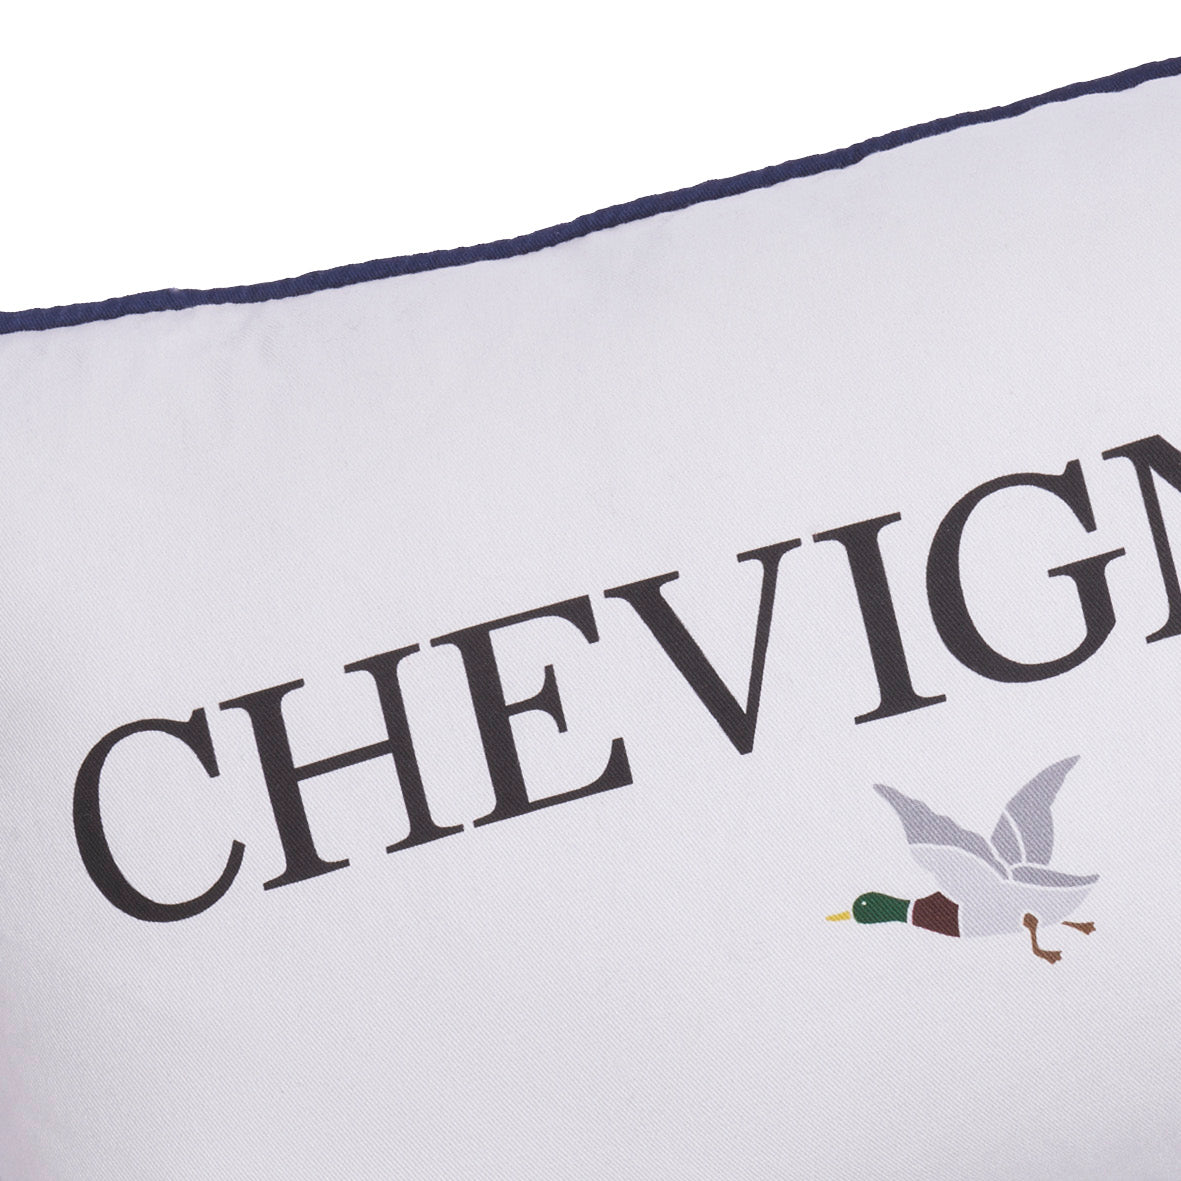 Cushion cover - Chevignon Off white